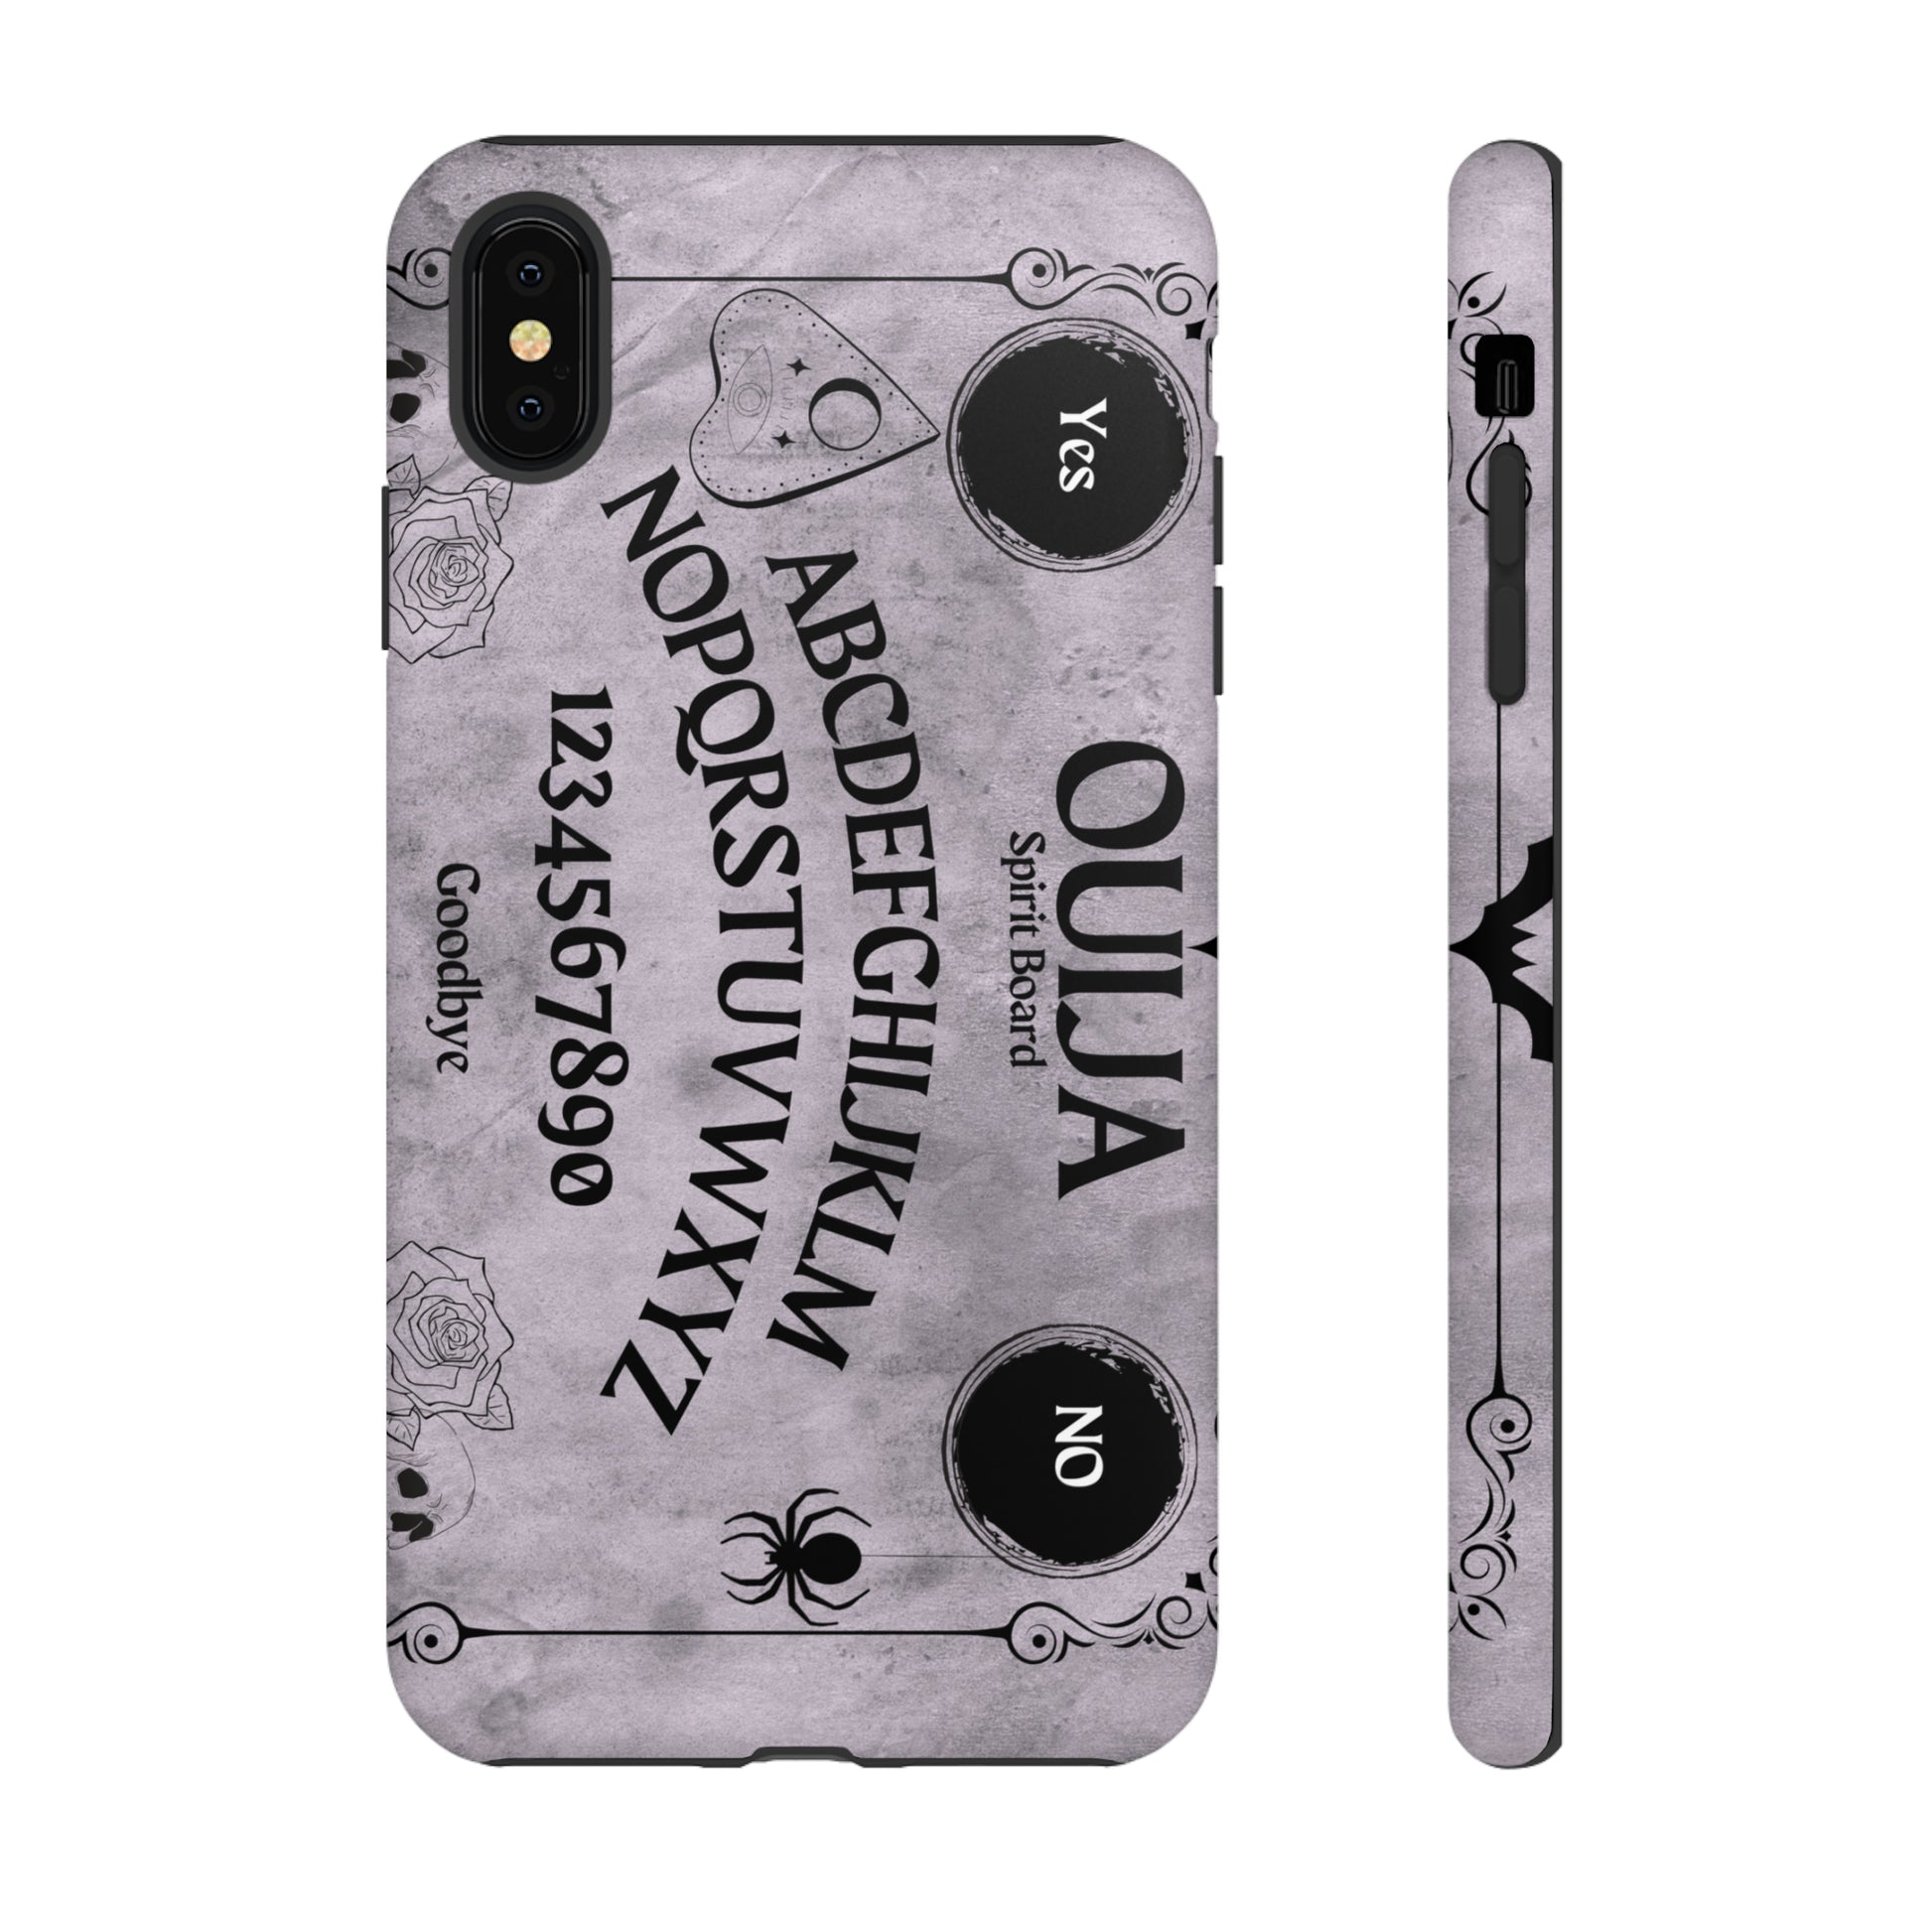 Ouija Board Tough Phone Cases For Samsung iPhone GooglePhone CaseVTZdesignsiPhone XS MAXMatteAccessoriesGlossyhalloween